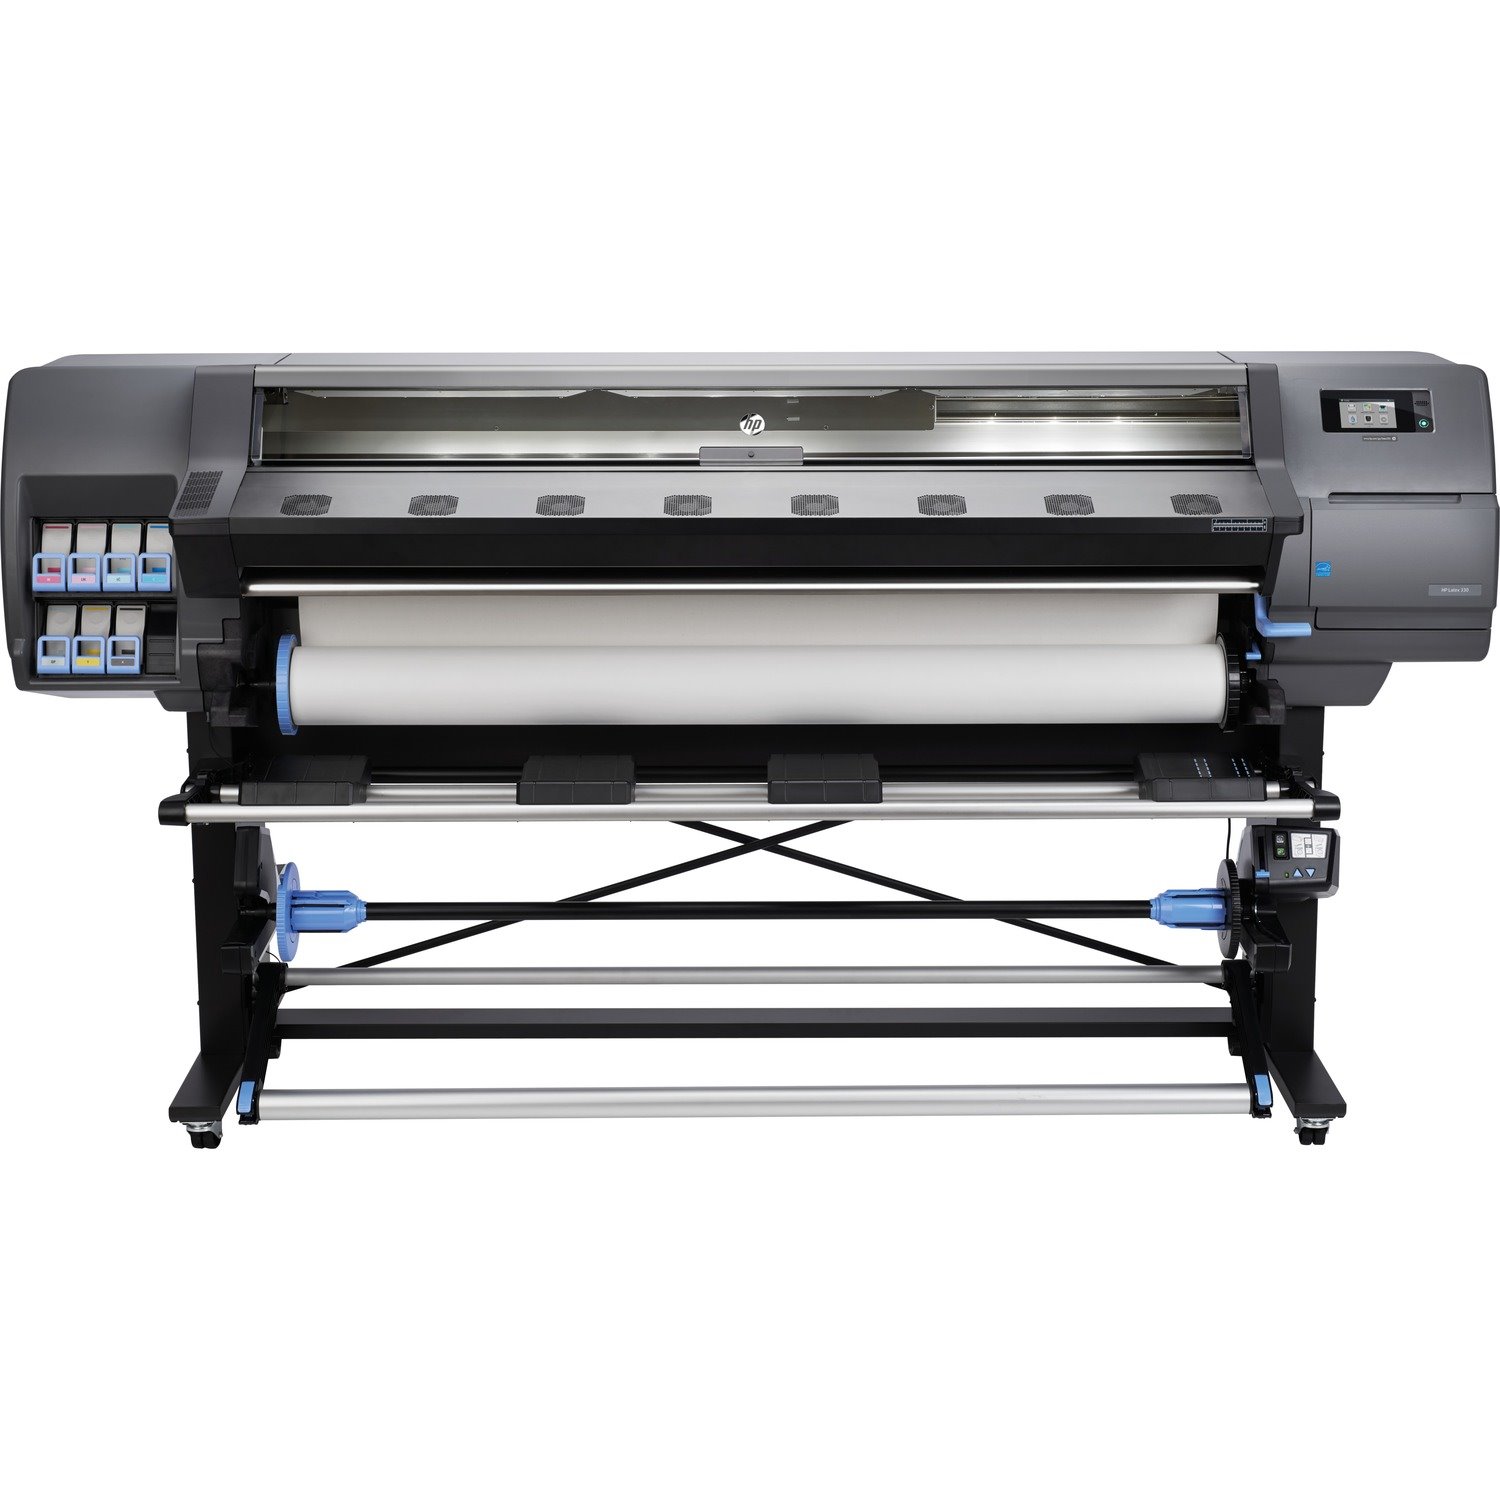 HP Latex 330 Inkjet Large Format Printer - Colour